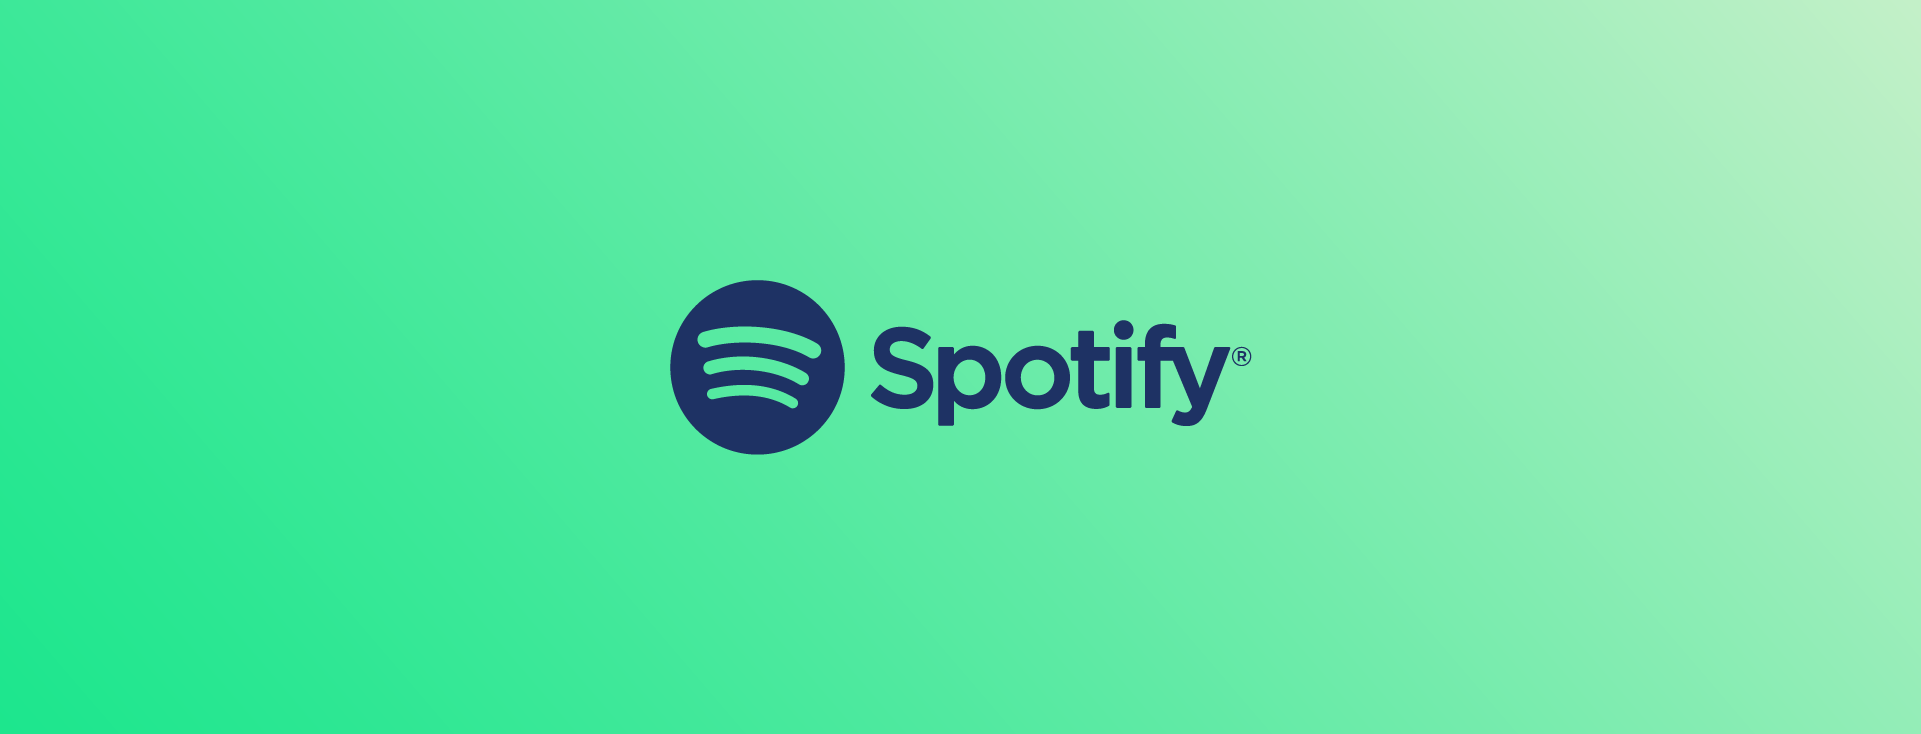 Spotify Header Image